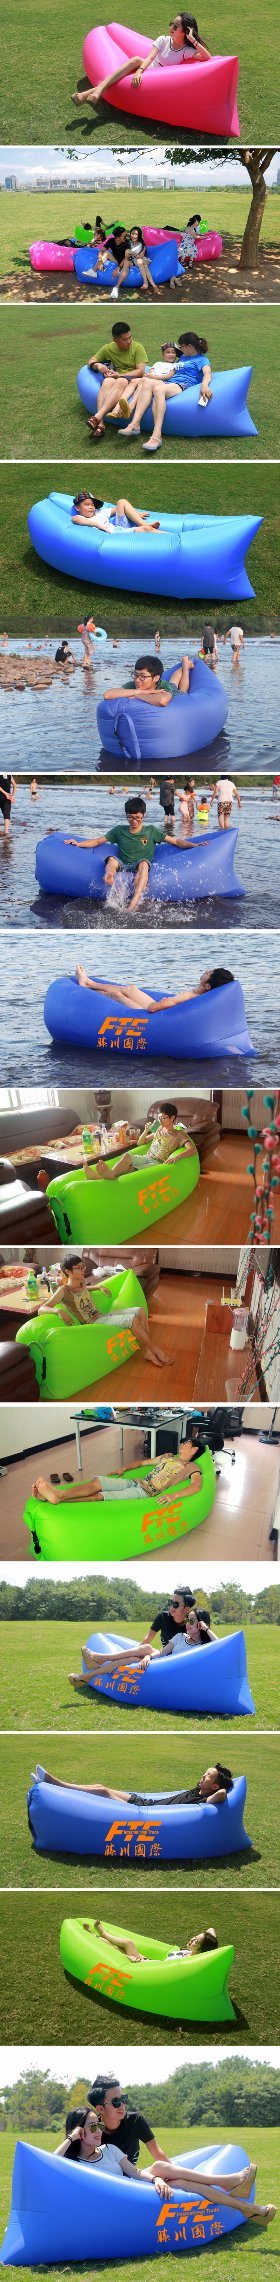 Hammock Air Lazy Sofa Inflatable Banana Sleeping Bags